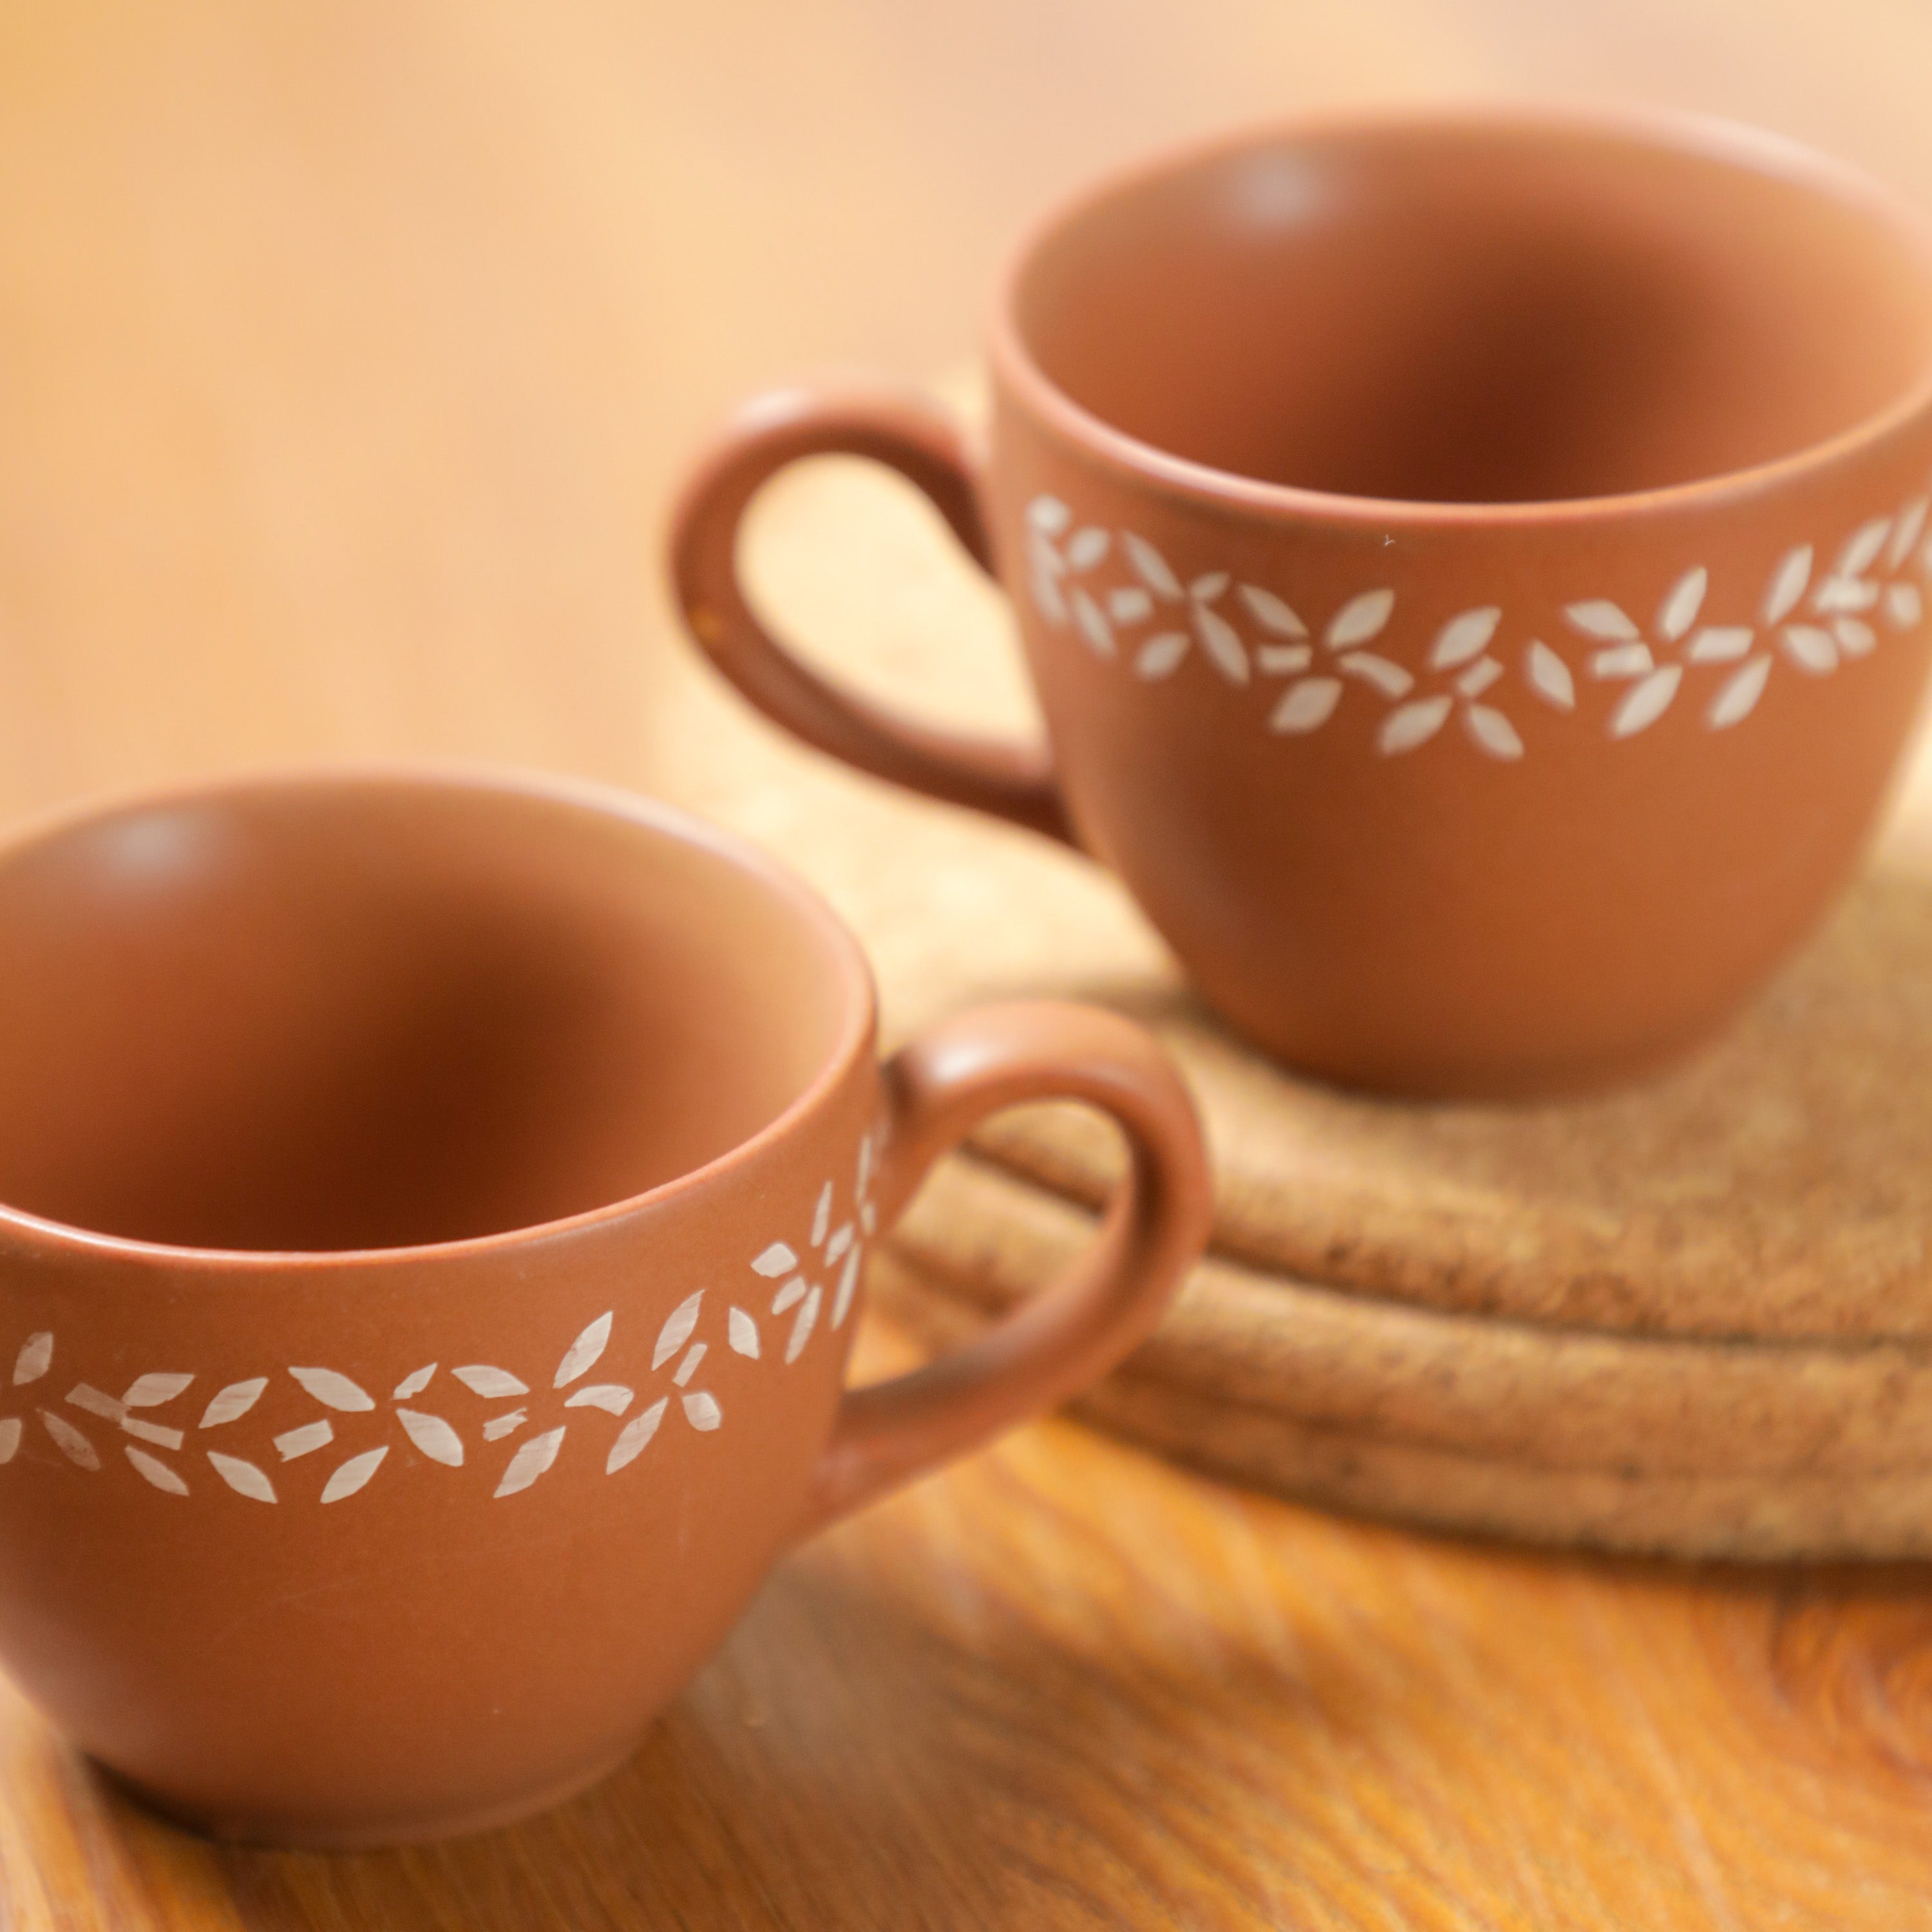 Designer Picks: Organizers for Mugs and Tea Cups